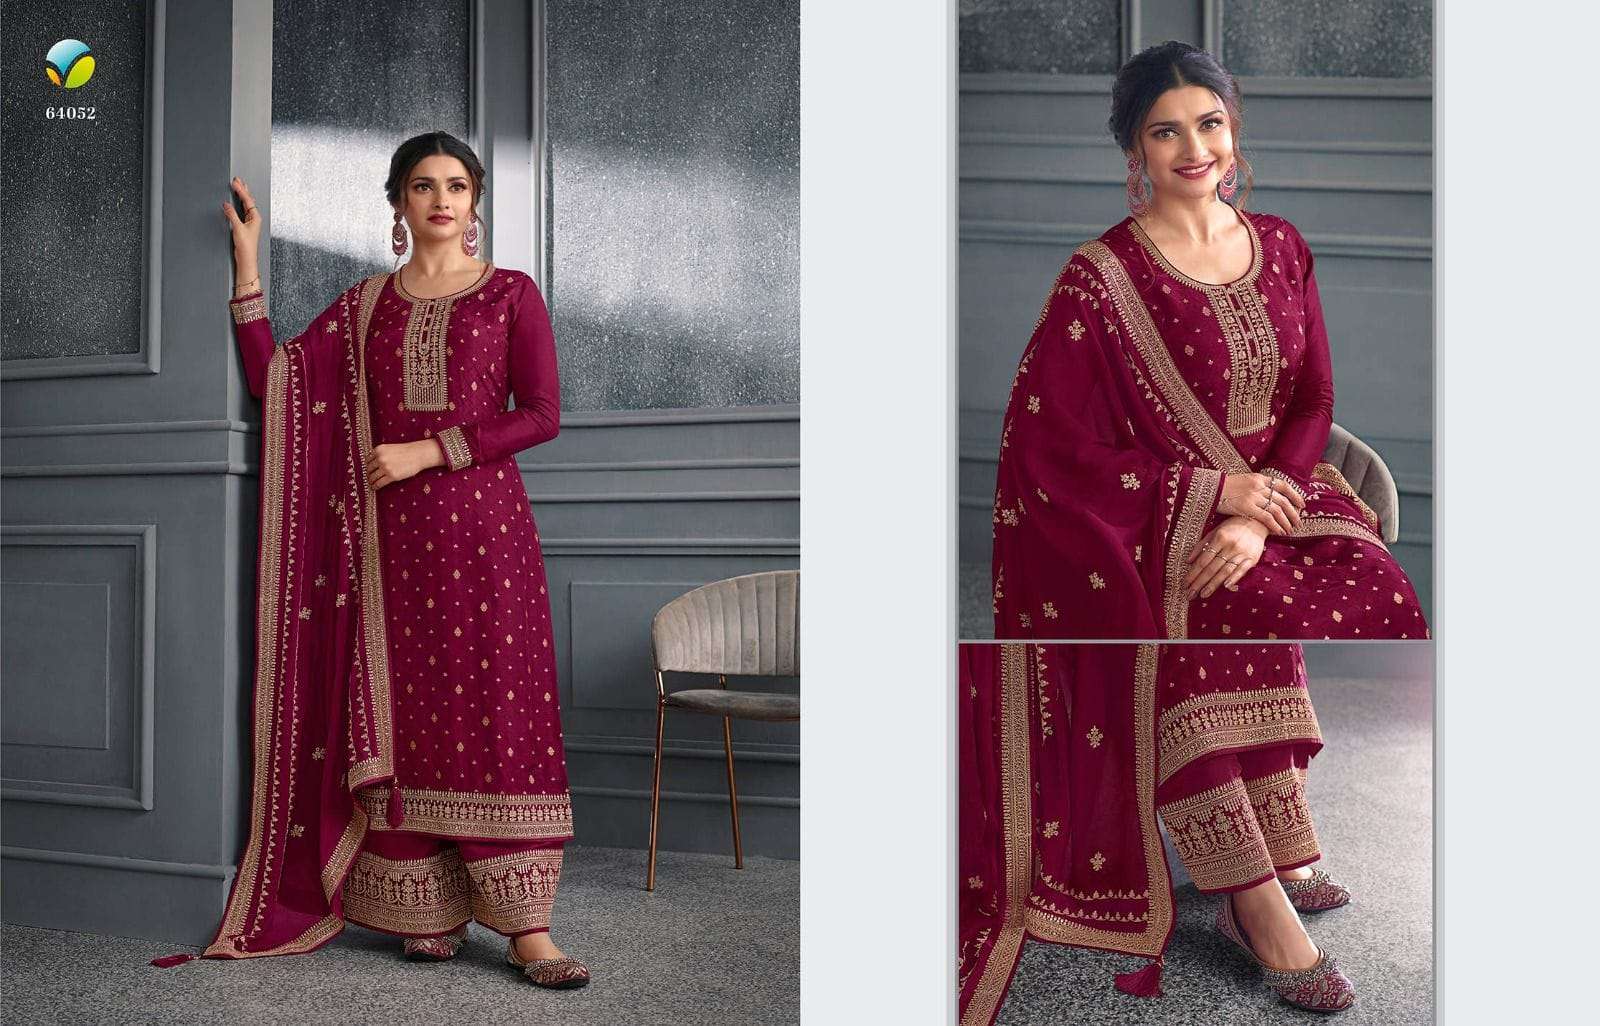 vinay kaseesh soha vol 2 64051-64058 series designer salwar kameez collection wholesaler 